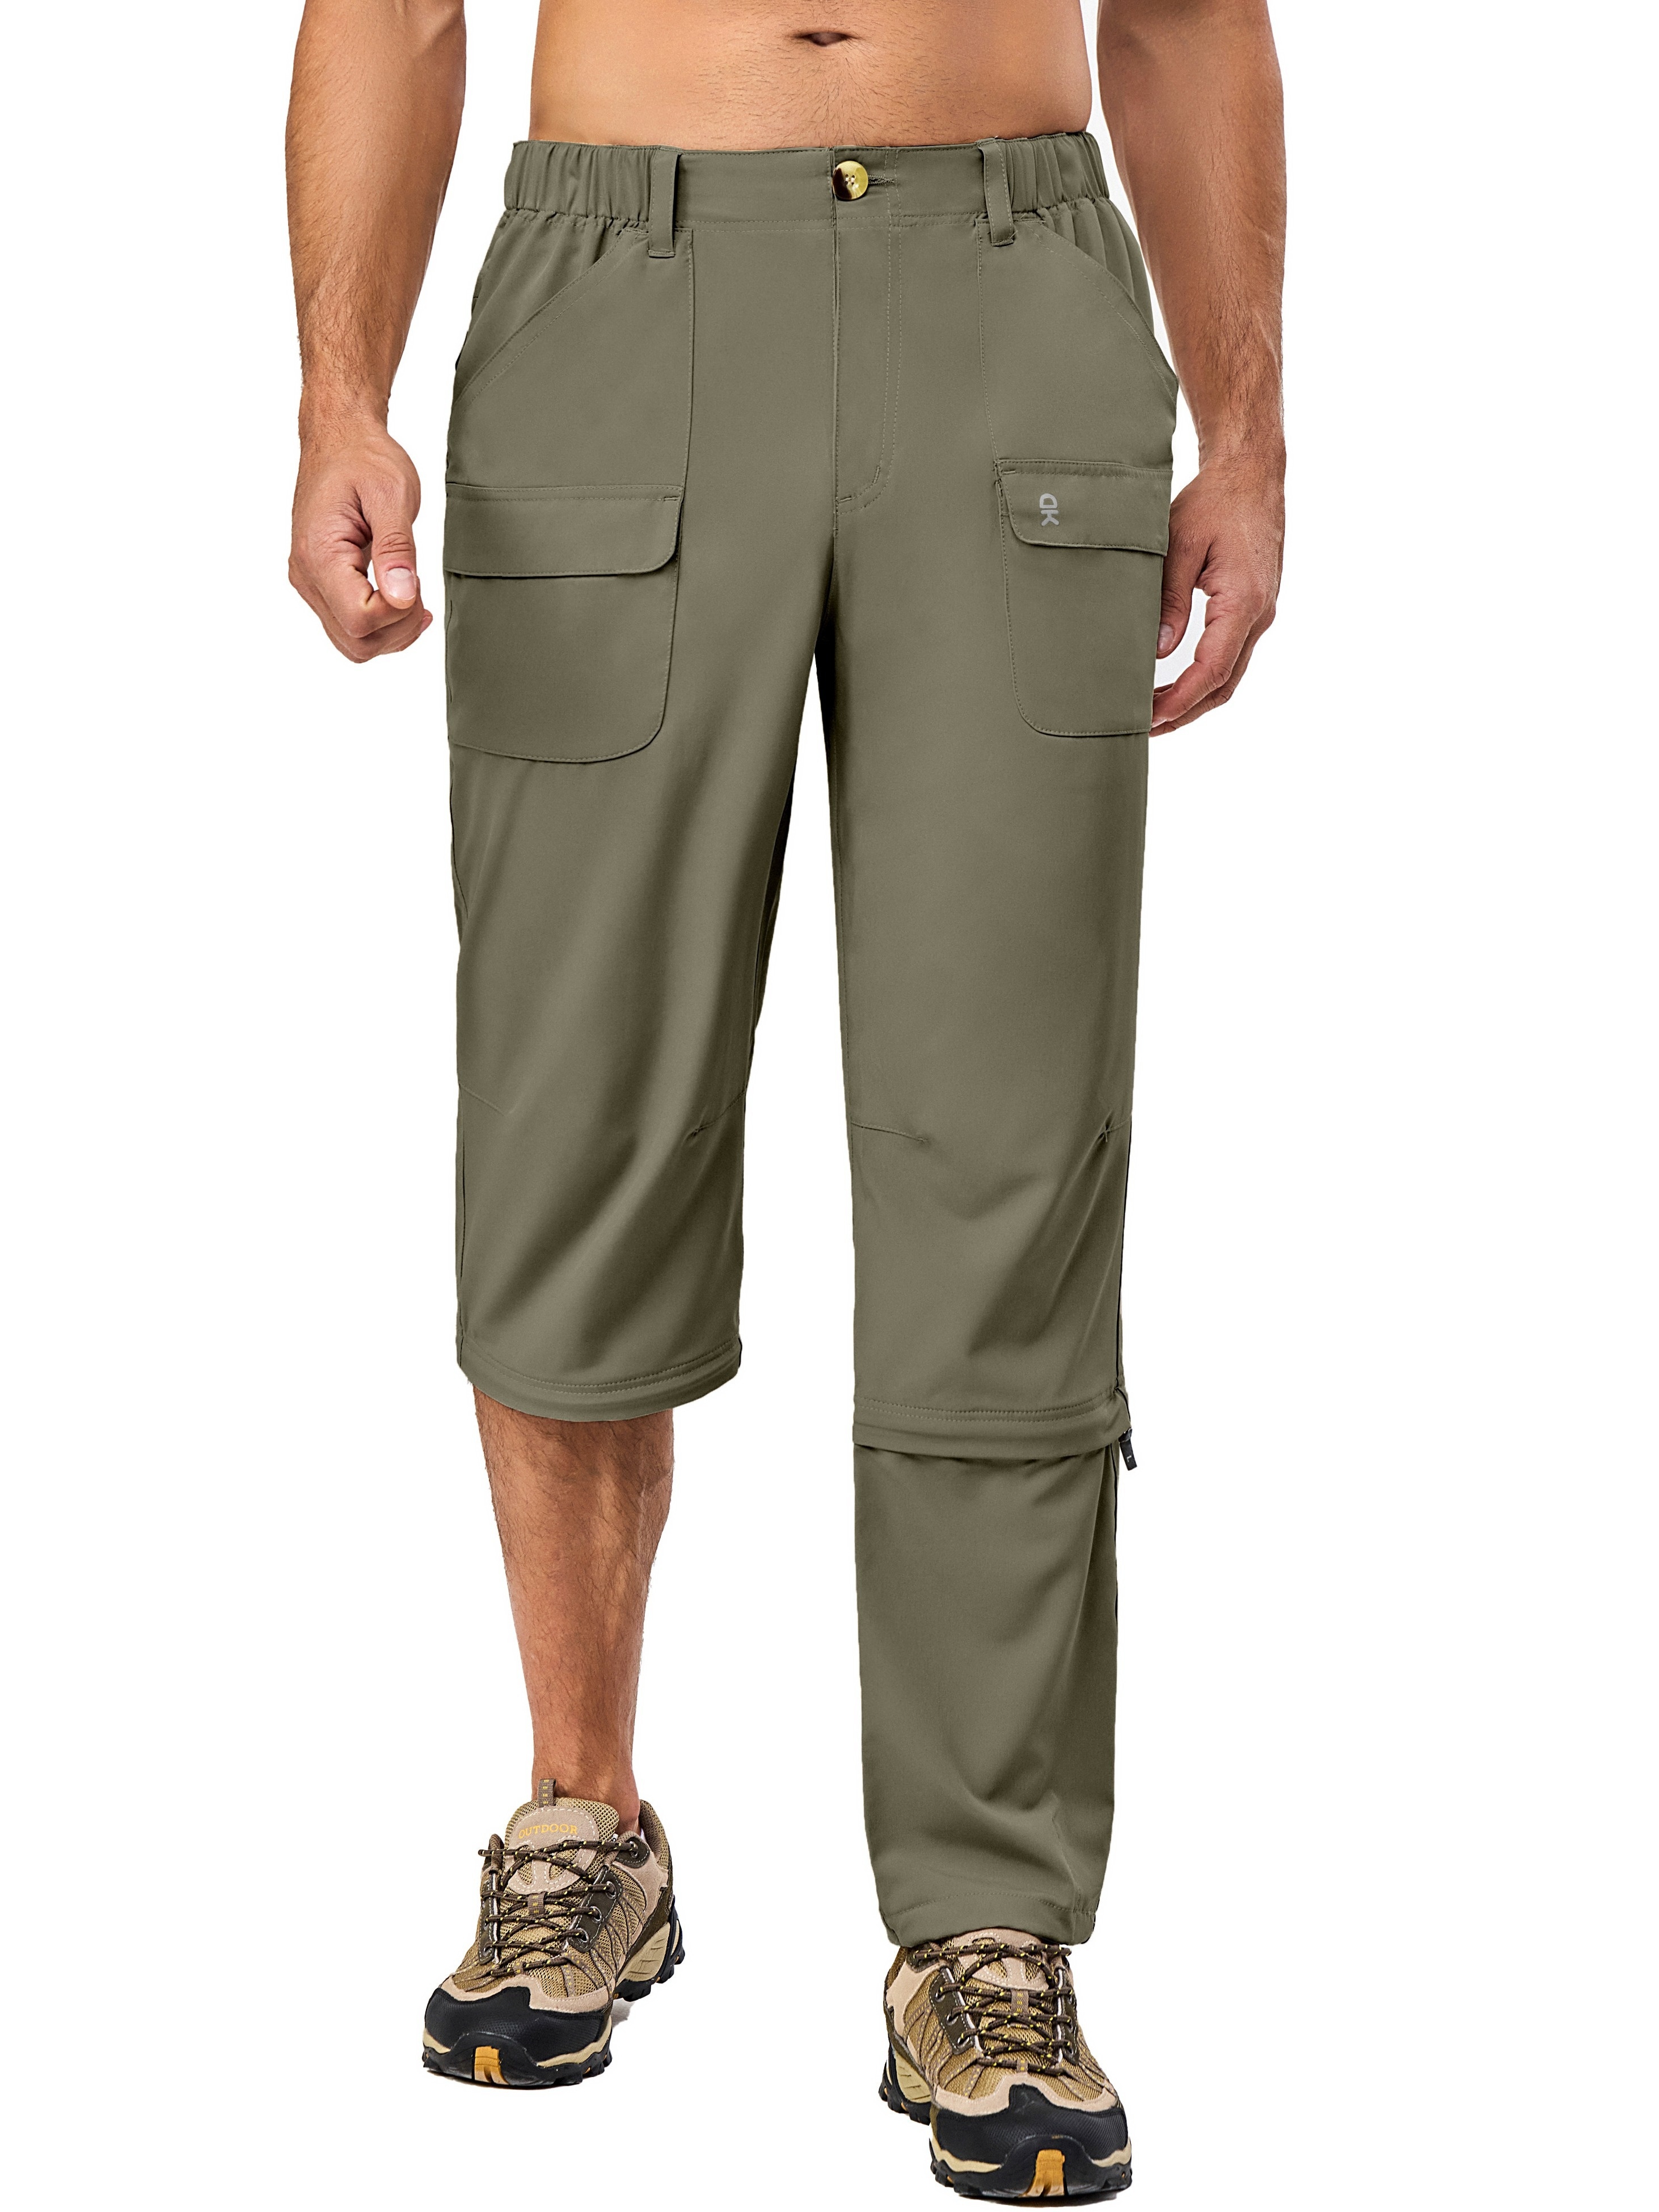 Men's Hiking Pants Convertible Zip Off Lightweight Quick Dry Outdoor  Camping Fishing Pants 